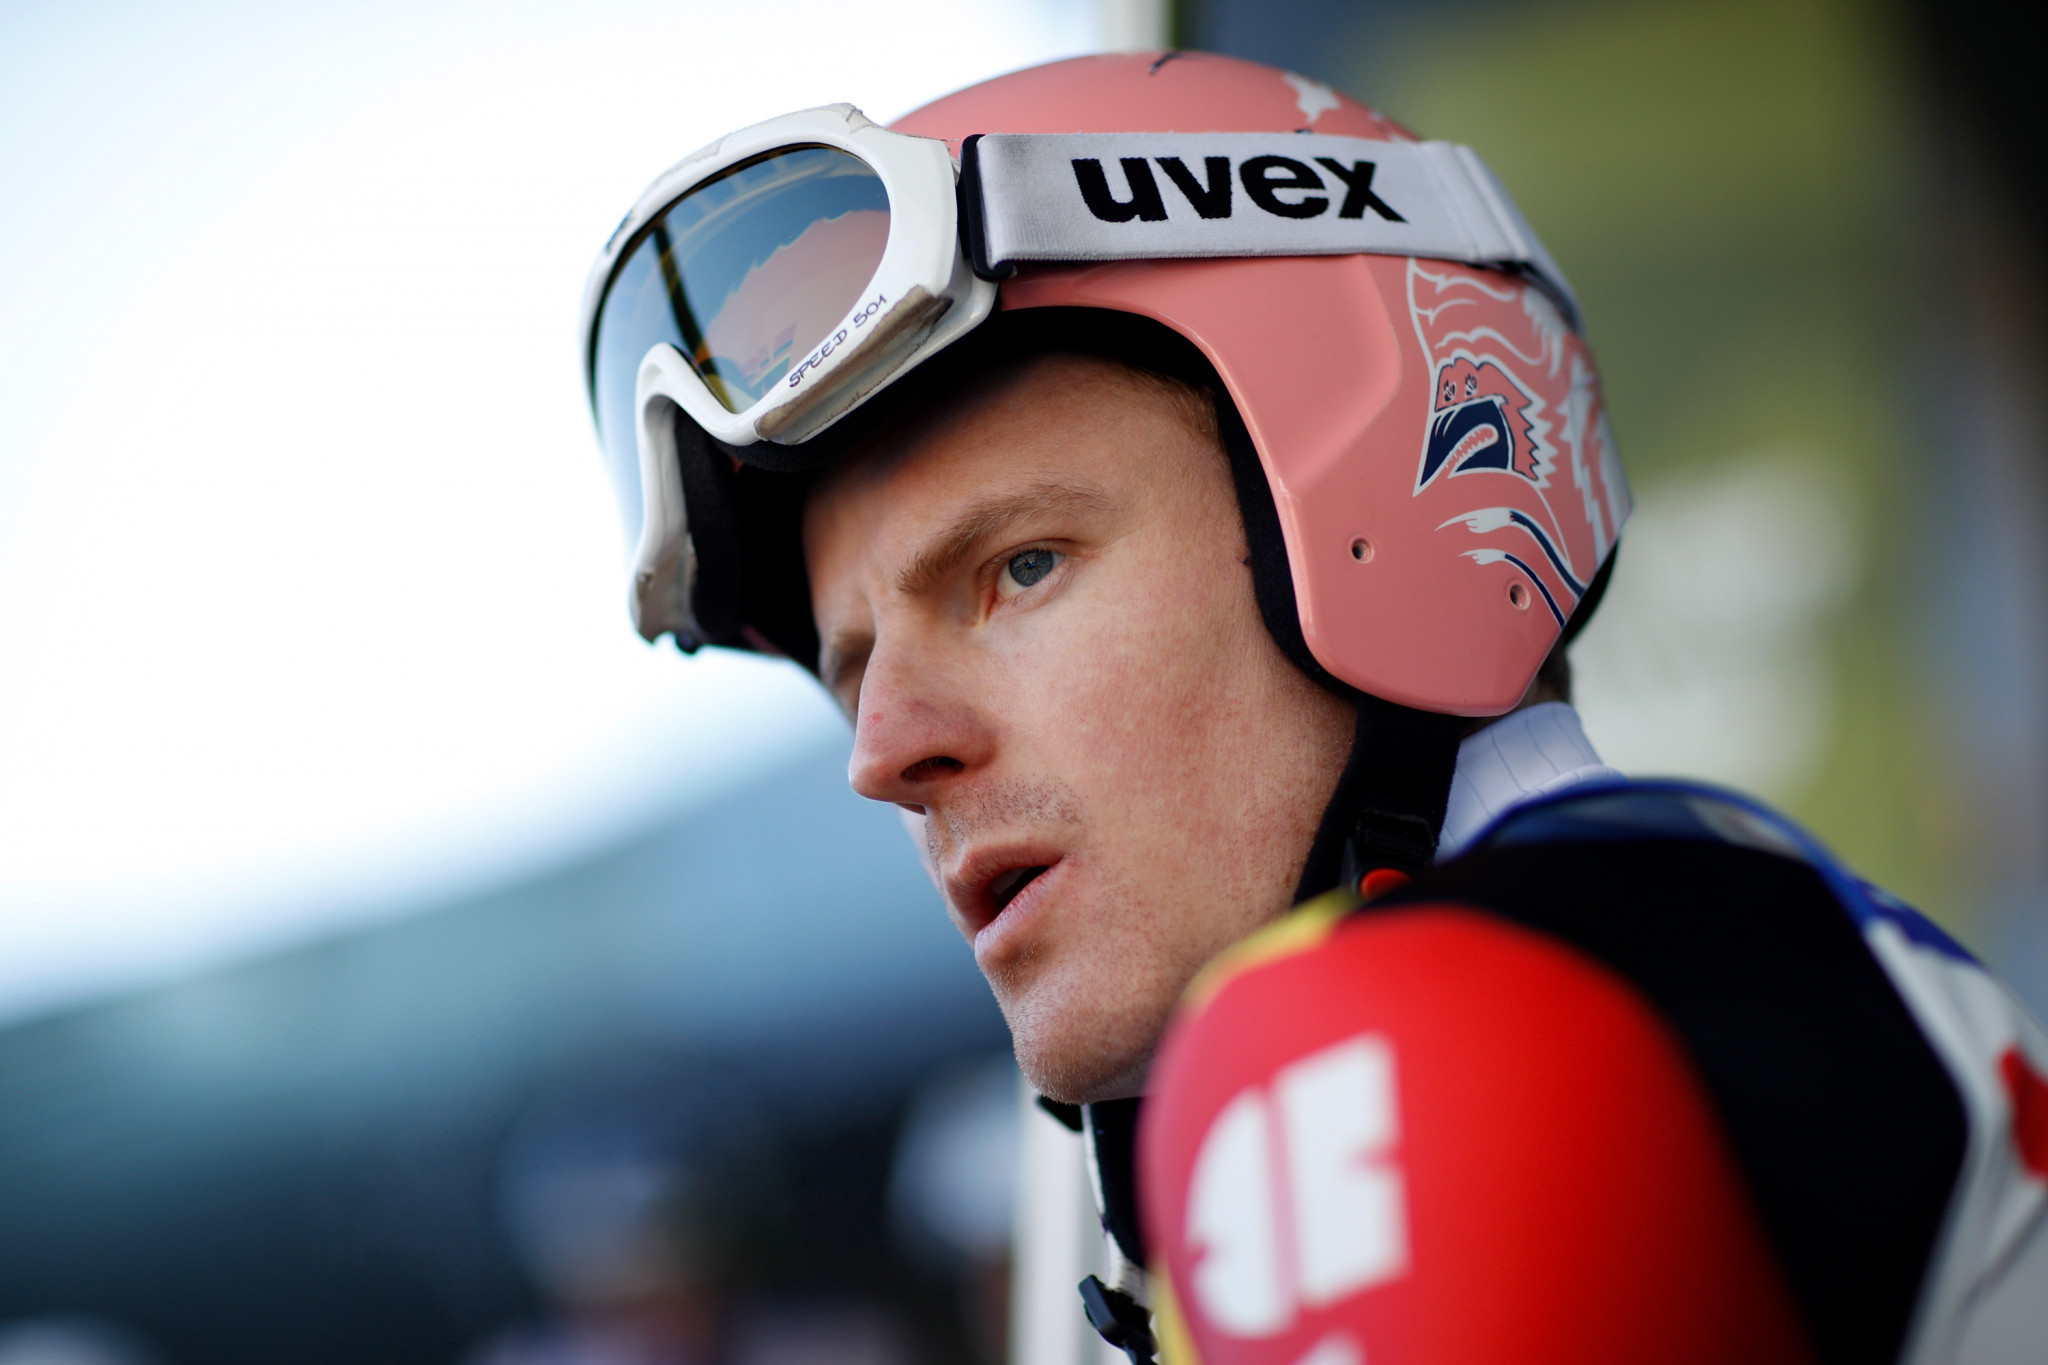 Olympic gold medallist Freund returns to ski jumping after injury setbacks